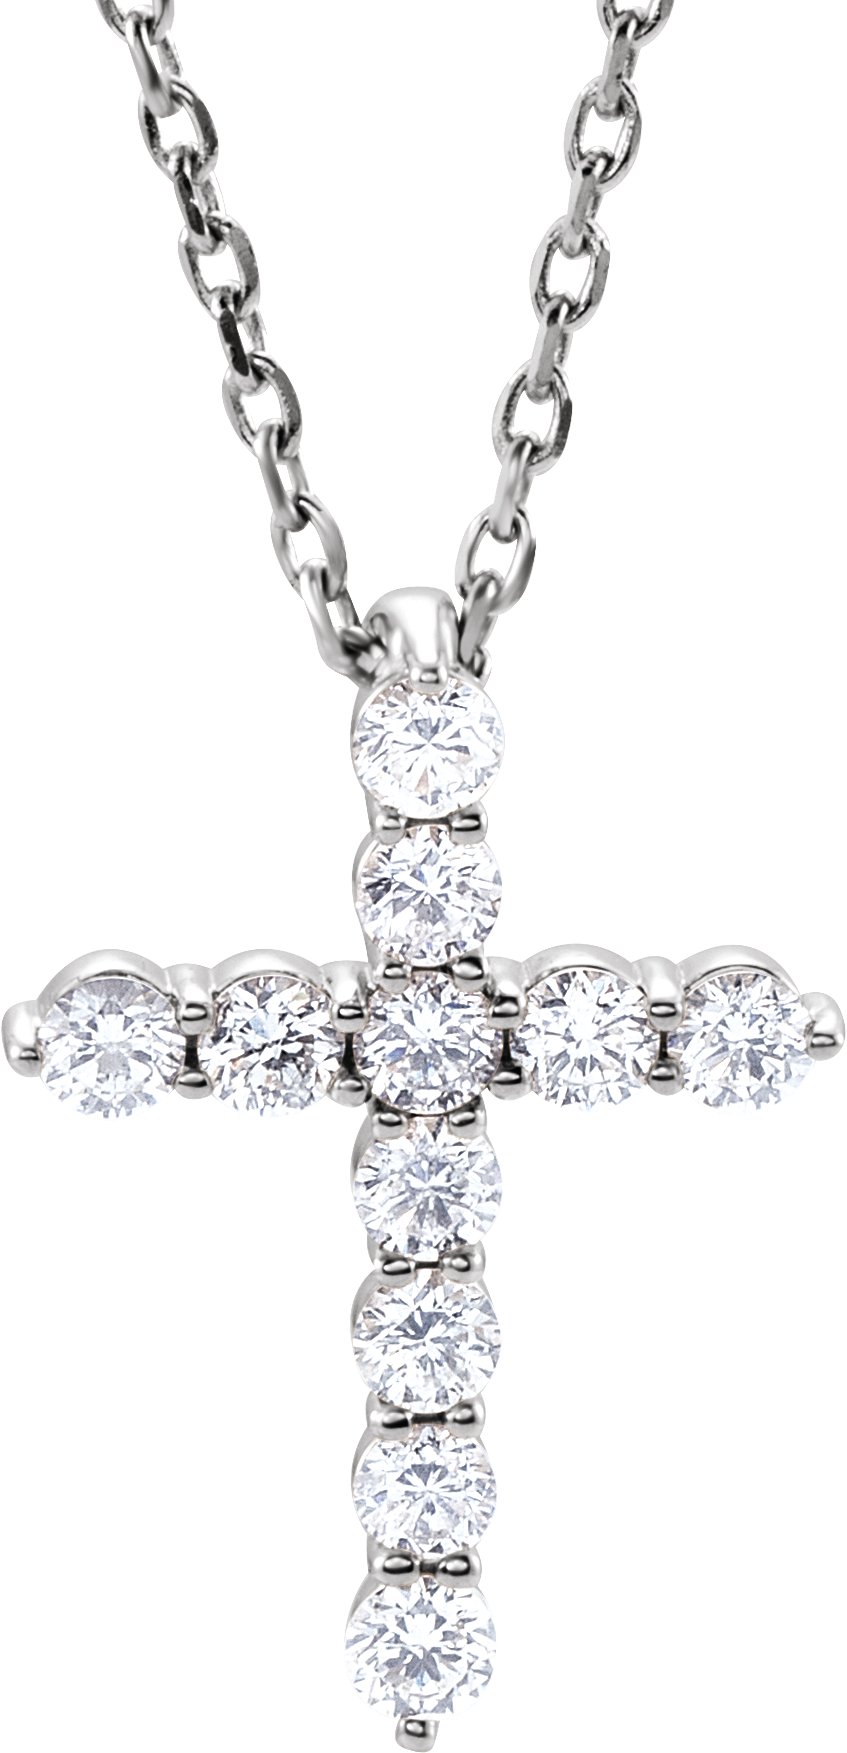 18 14K White Gold Diamond Cross Pendant Necklace